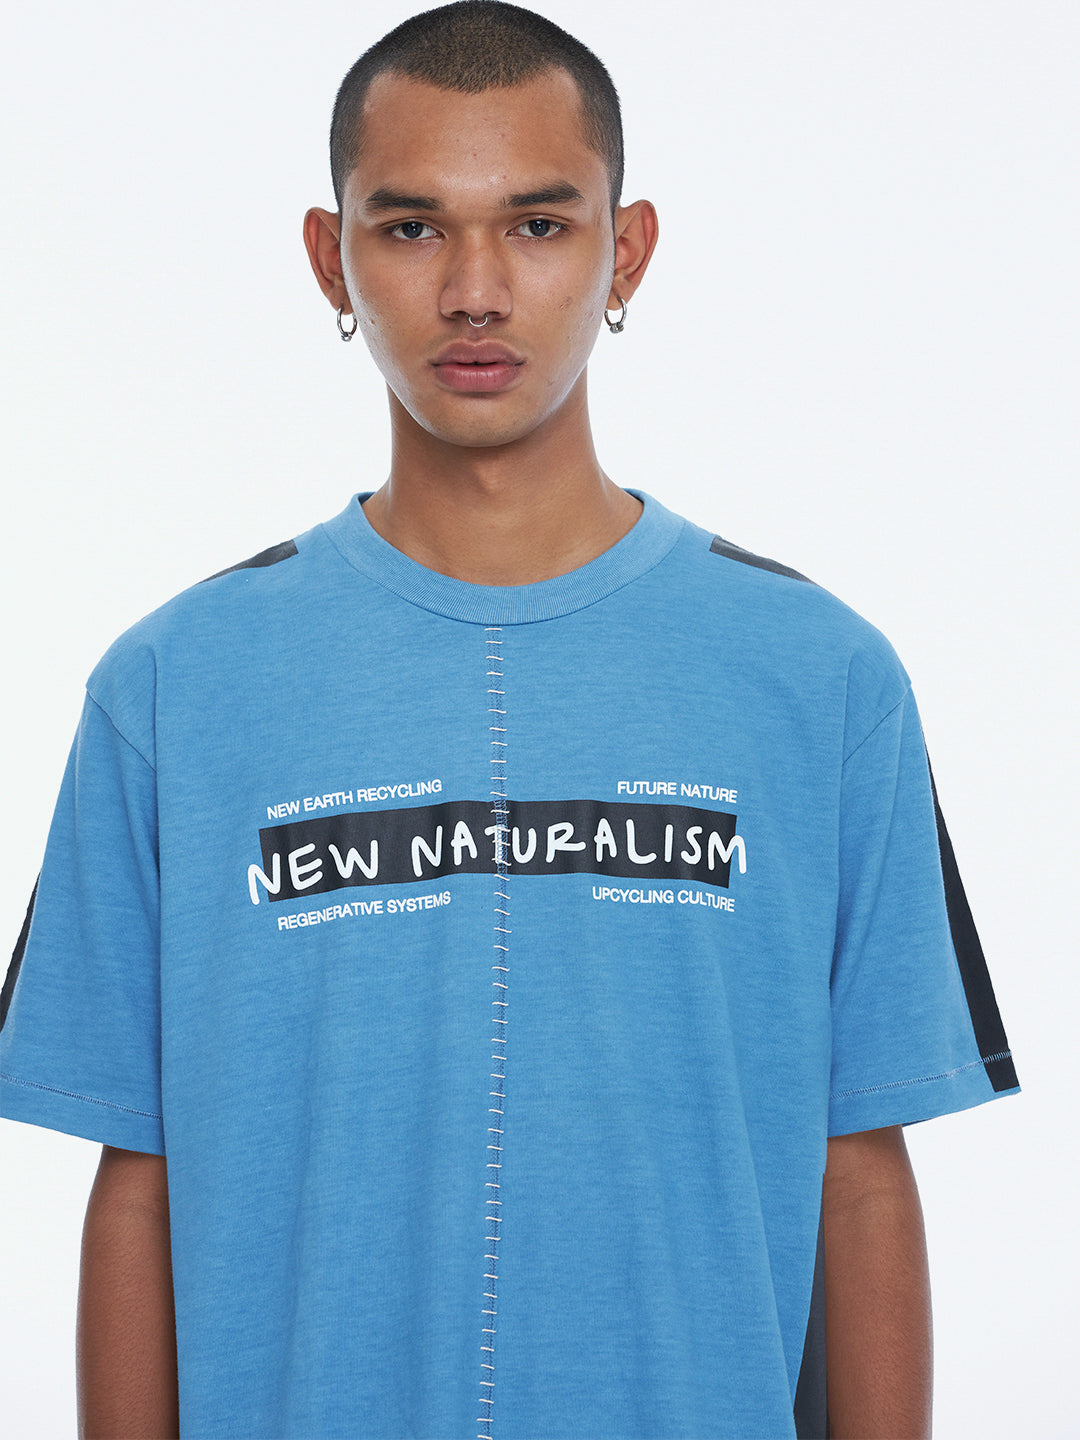 Artisan Naturalism T-Shirt Indigo